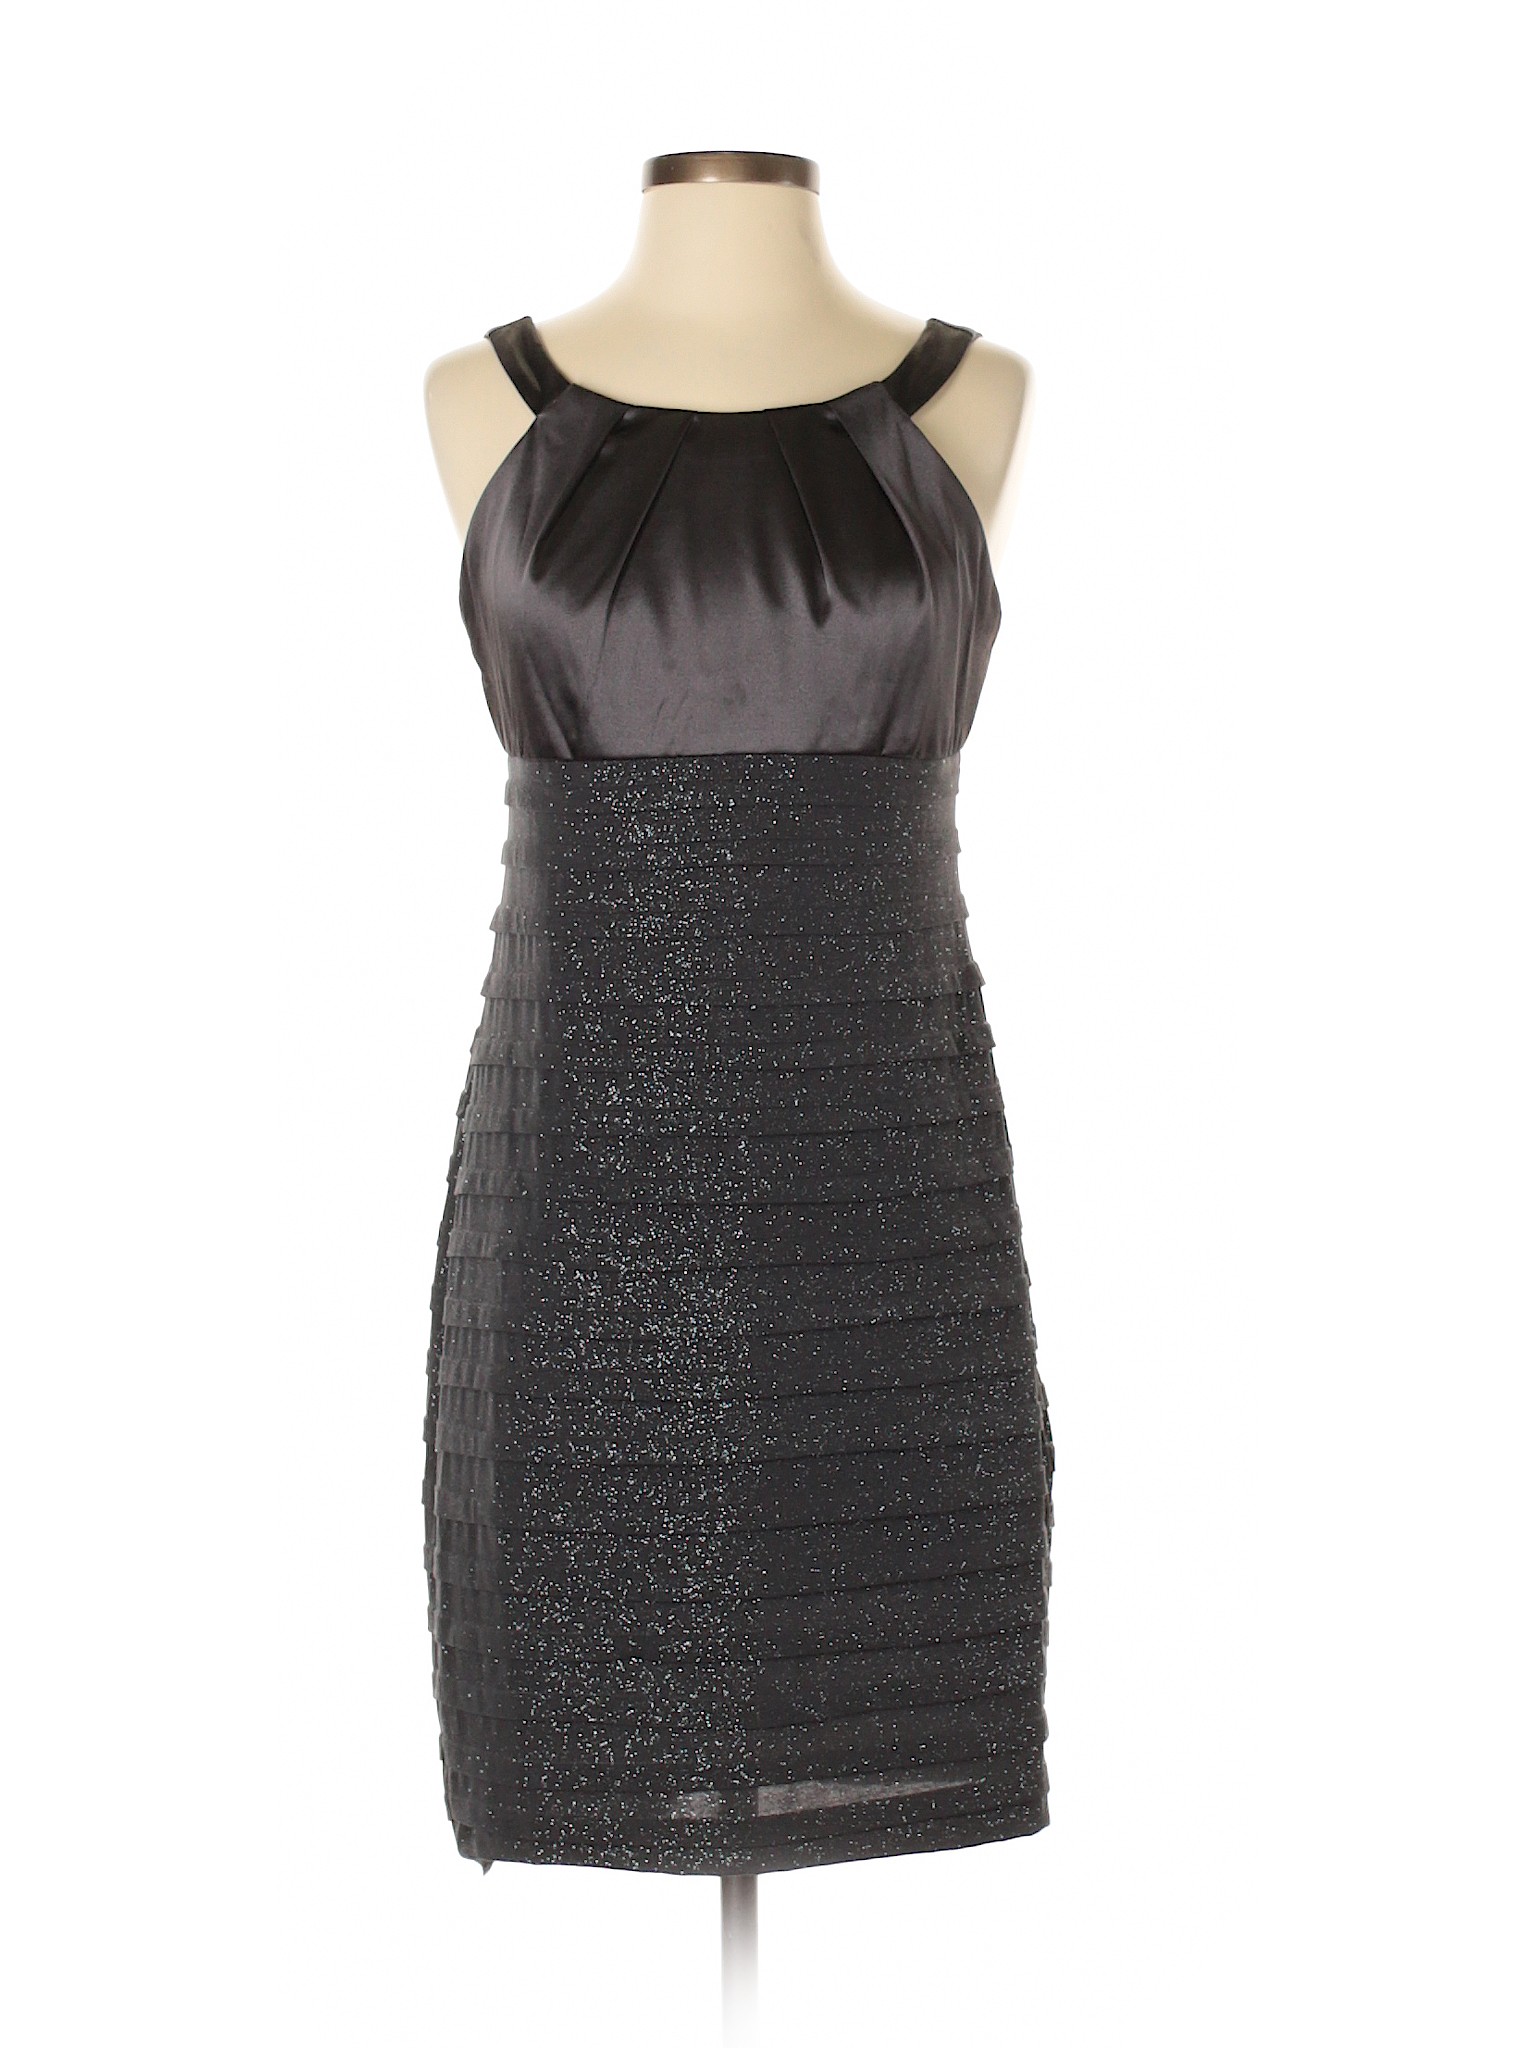 R&M Richards Solid Black Cocktail Dress Size 6 (Petite) - 95% off | thredUP